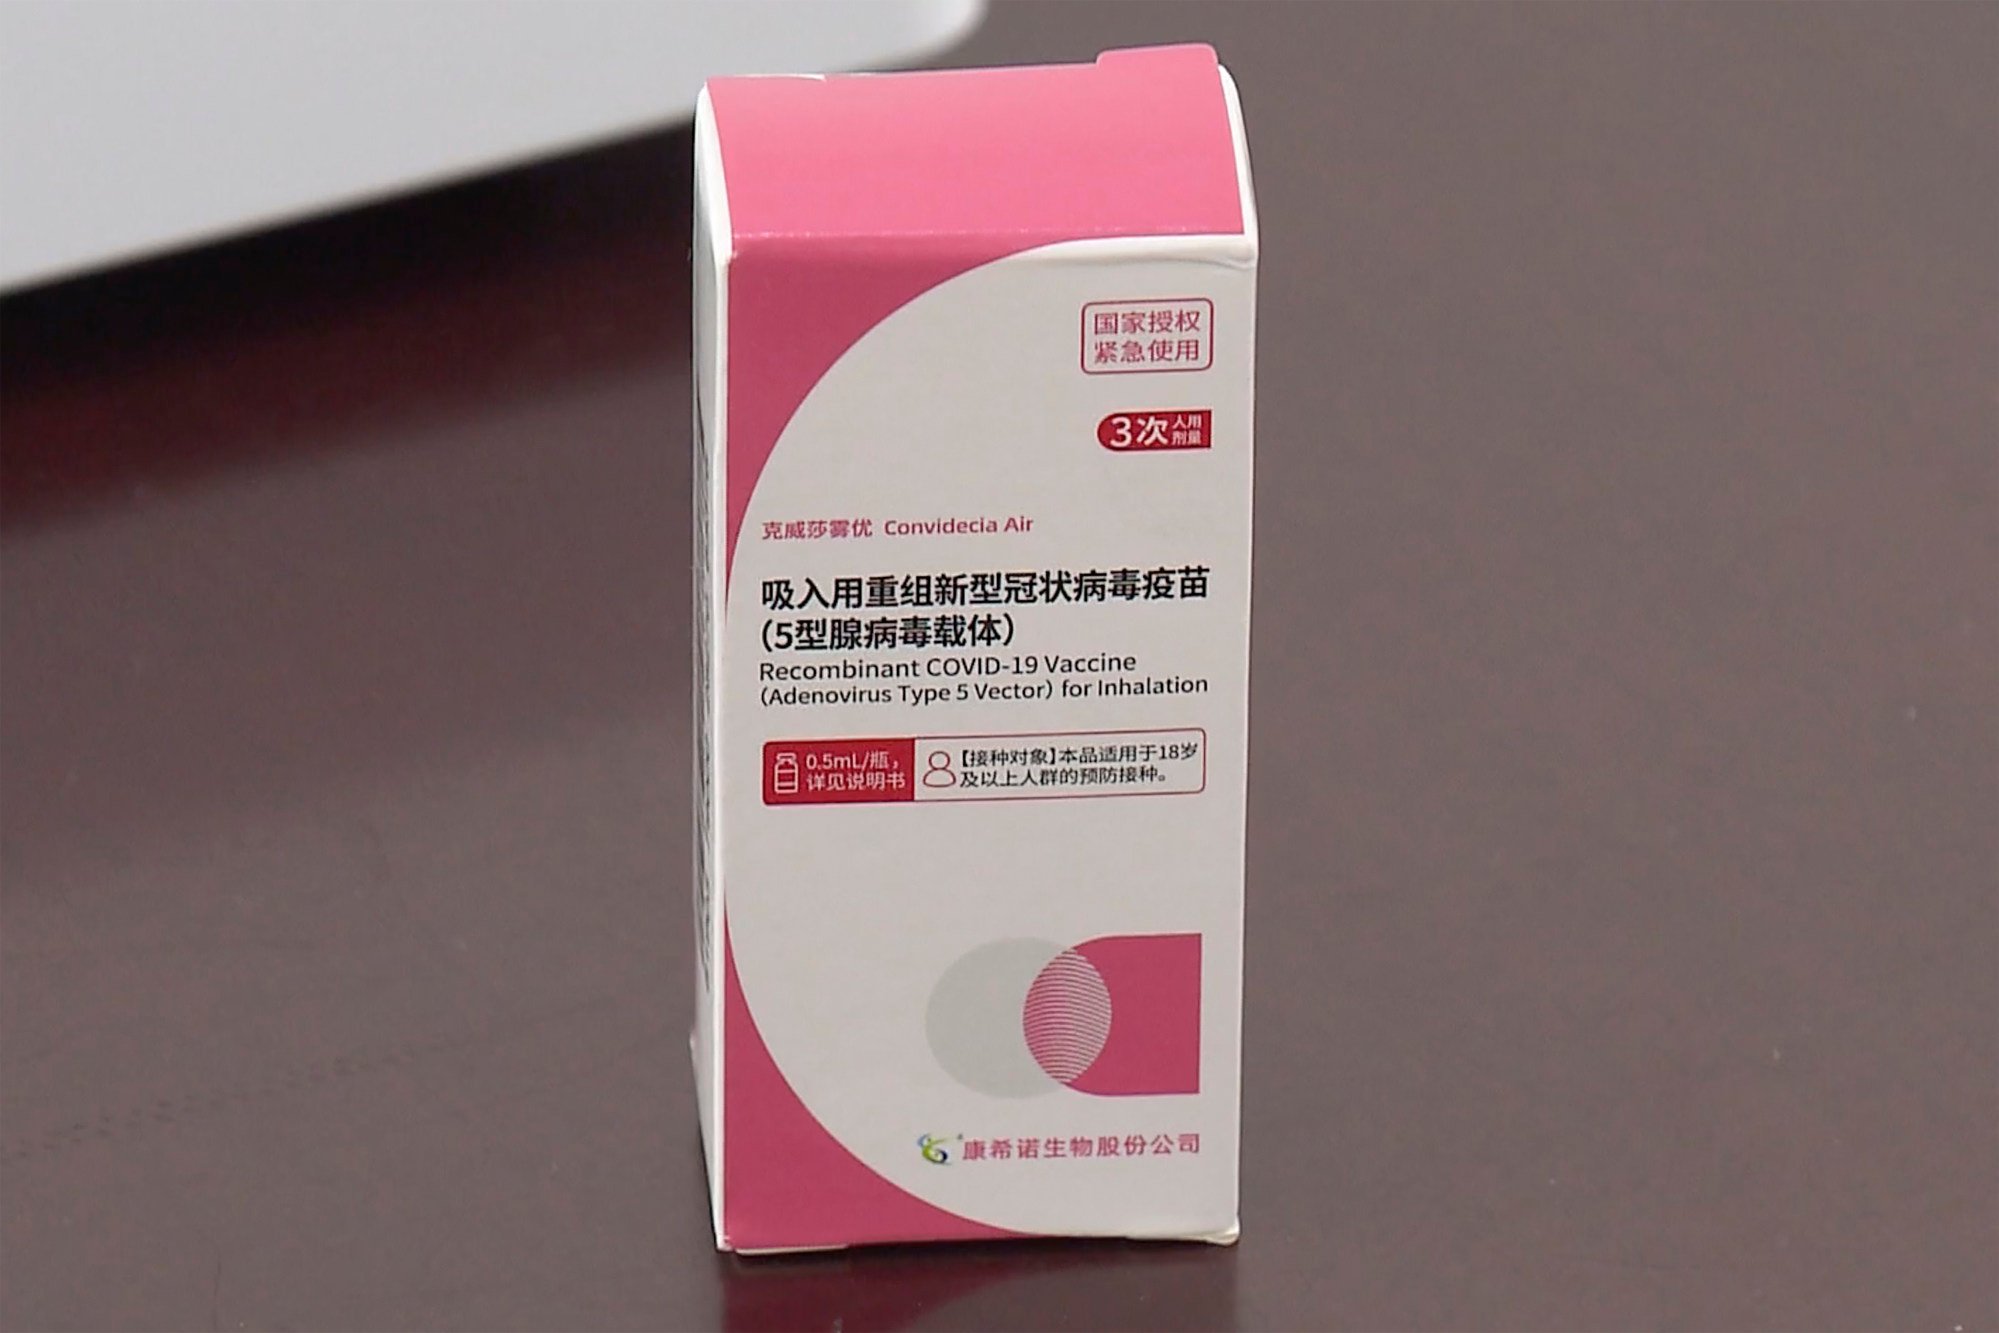 CanSino Biologics’ inhalable Covid-19 vaccine. Photo: Shanghai Media Group via AP